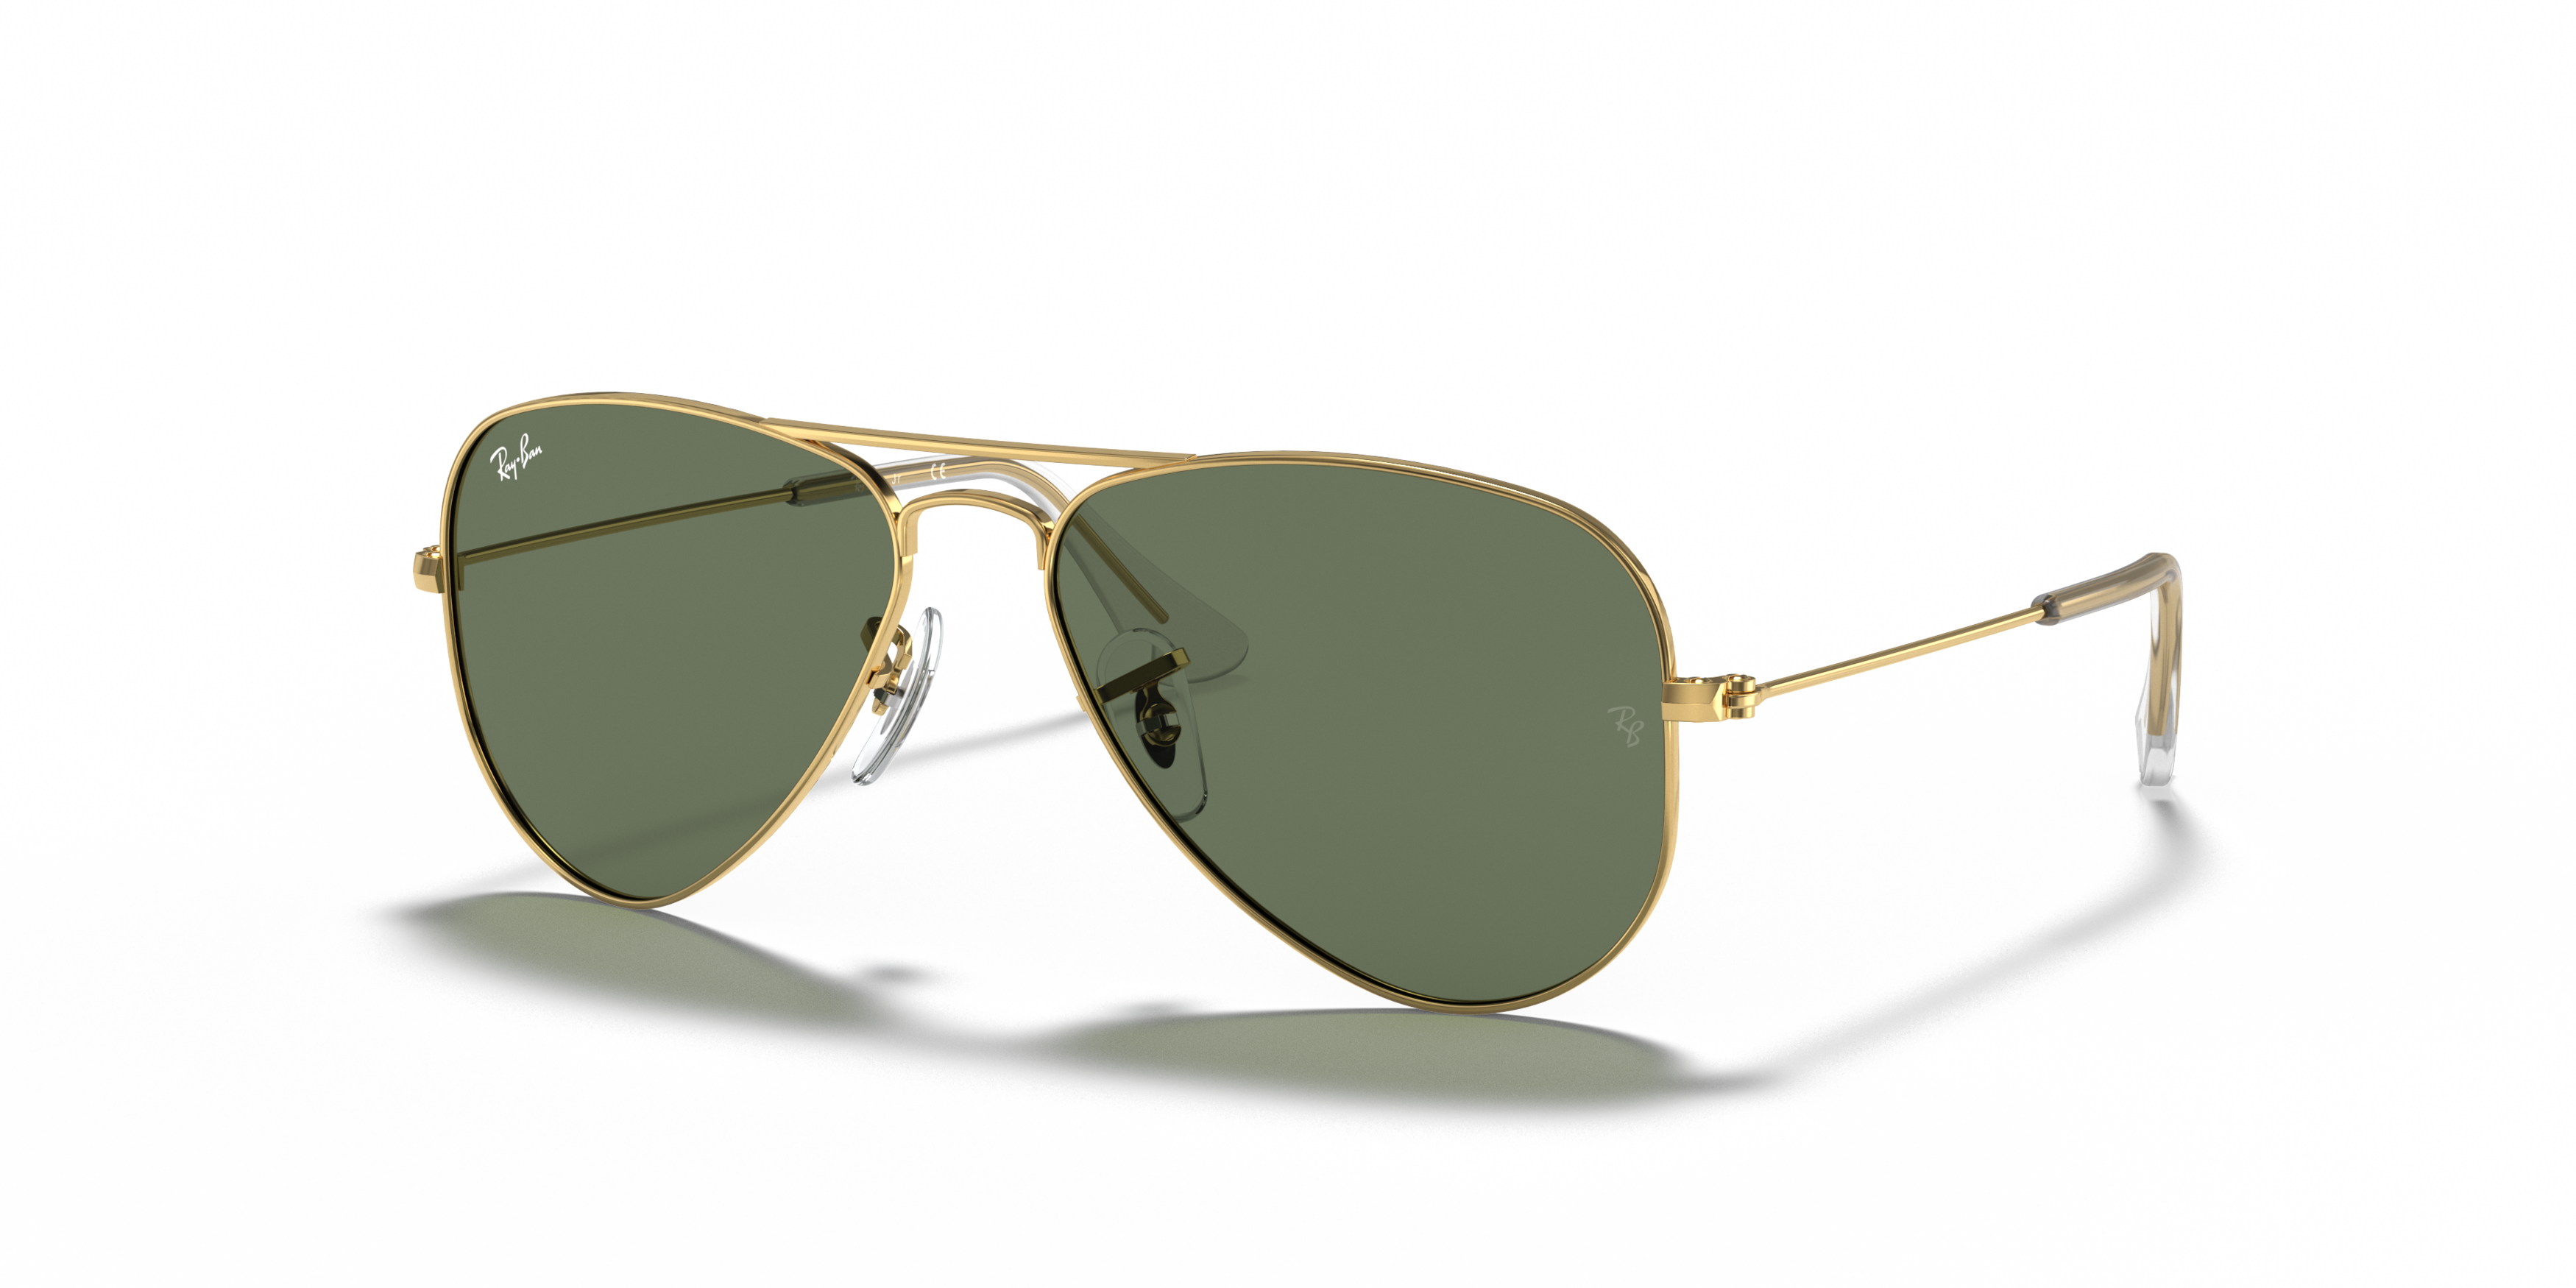 Angle_Left01 Ray-Ban RJ9506S Children's Sunglasses Green / Gold